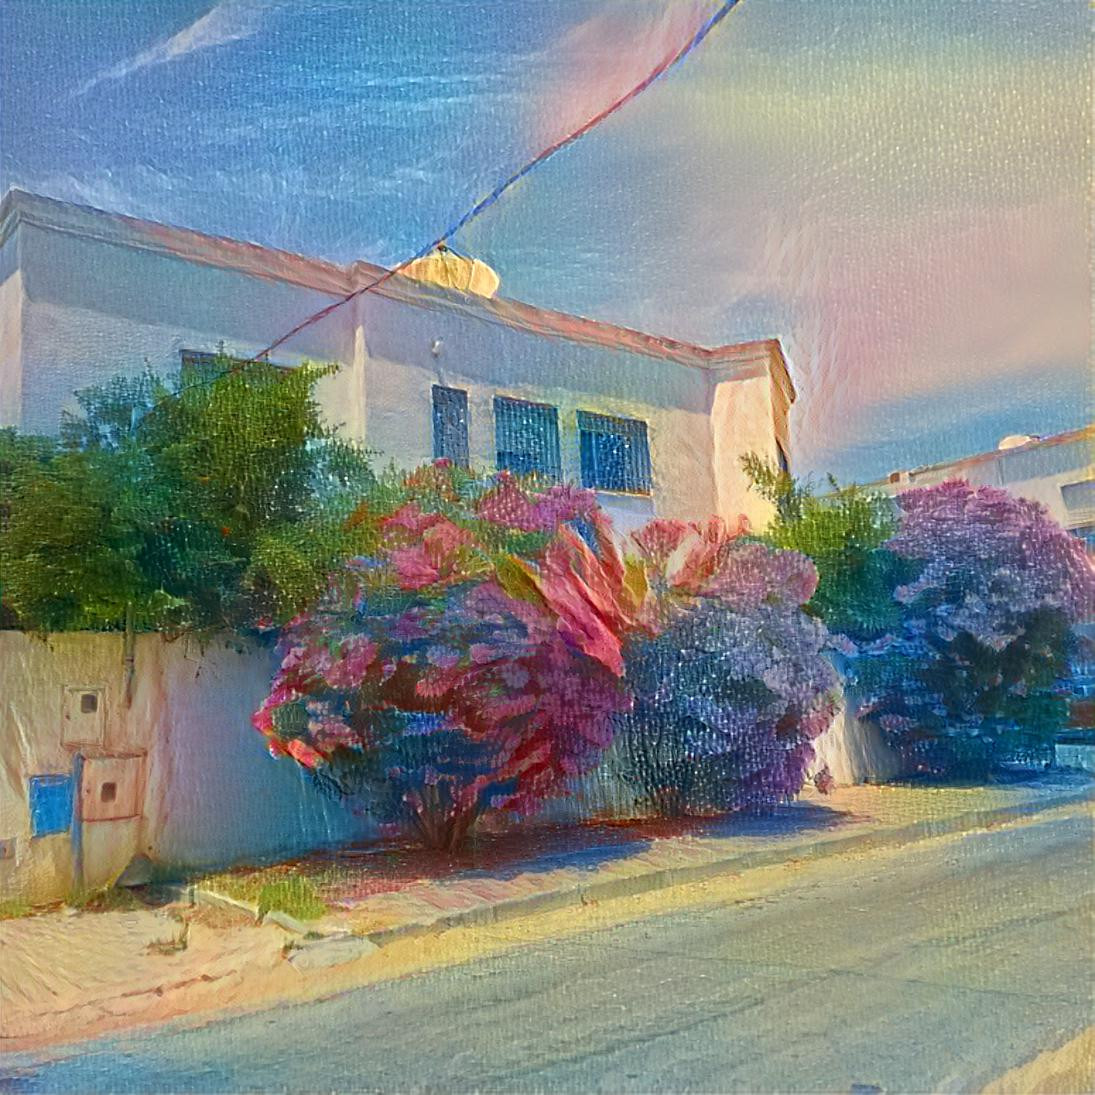 Carthage maison aux fleurs 2 by TYNA